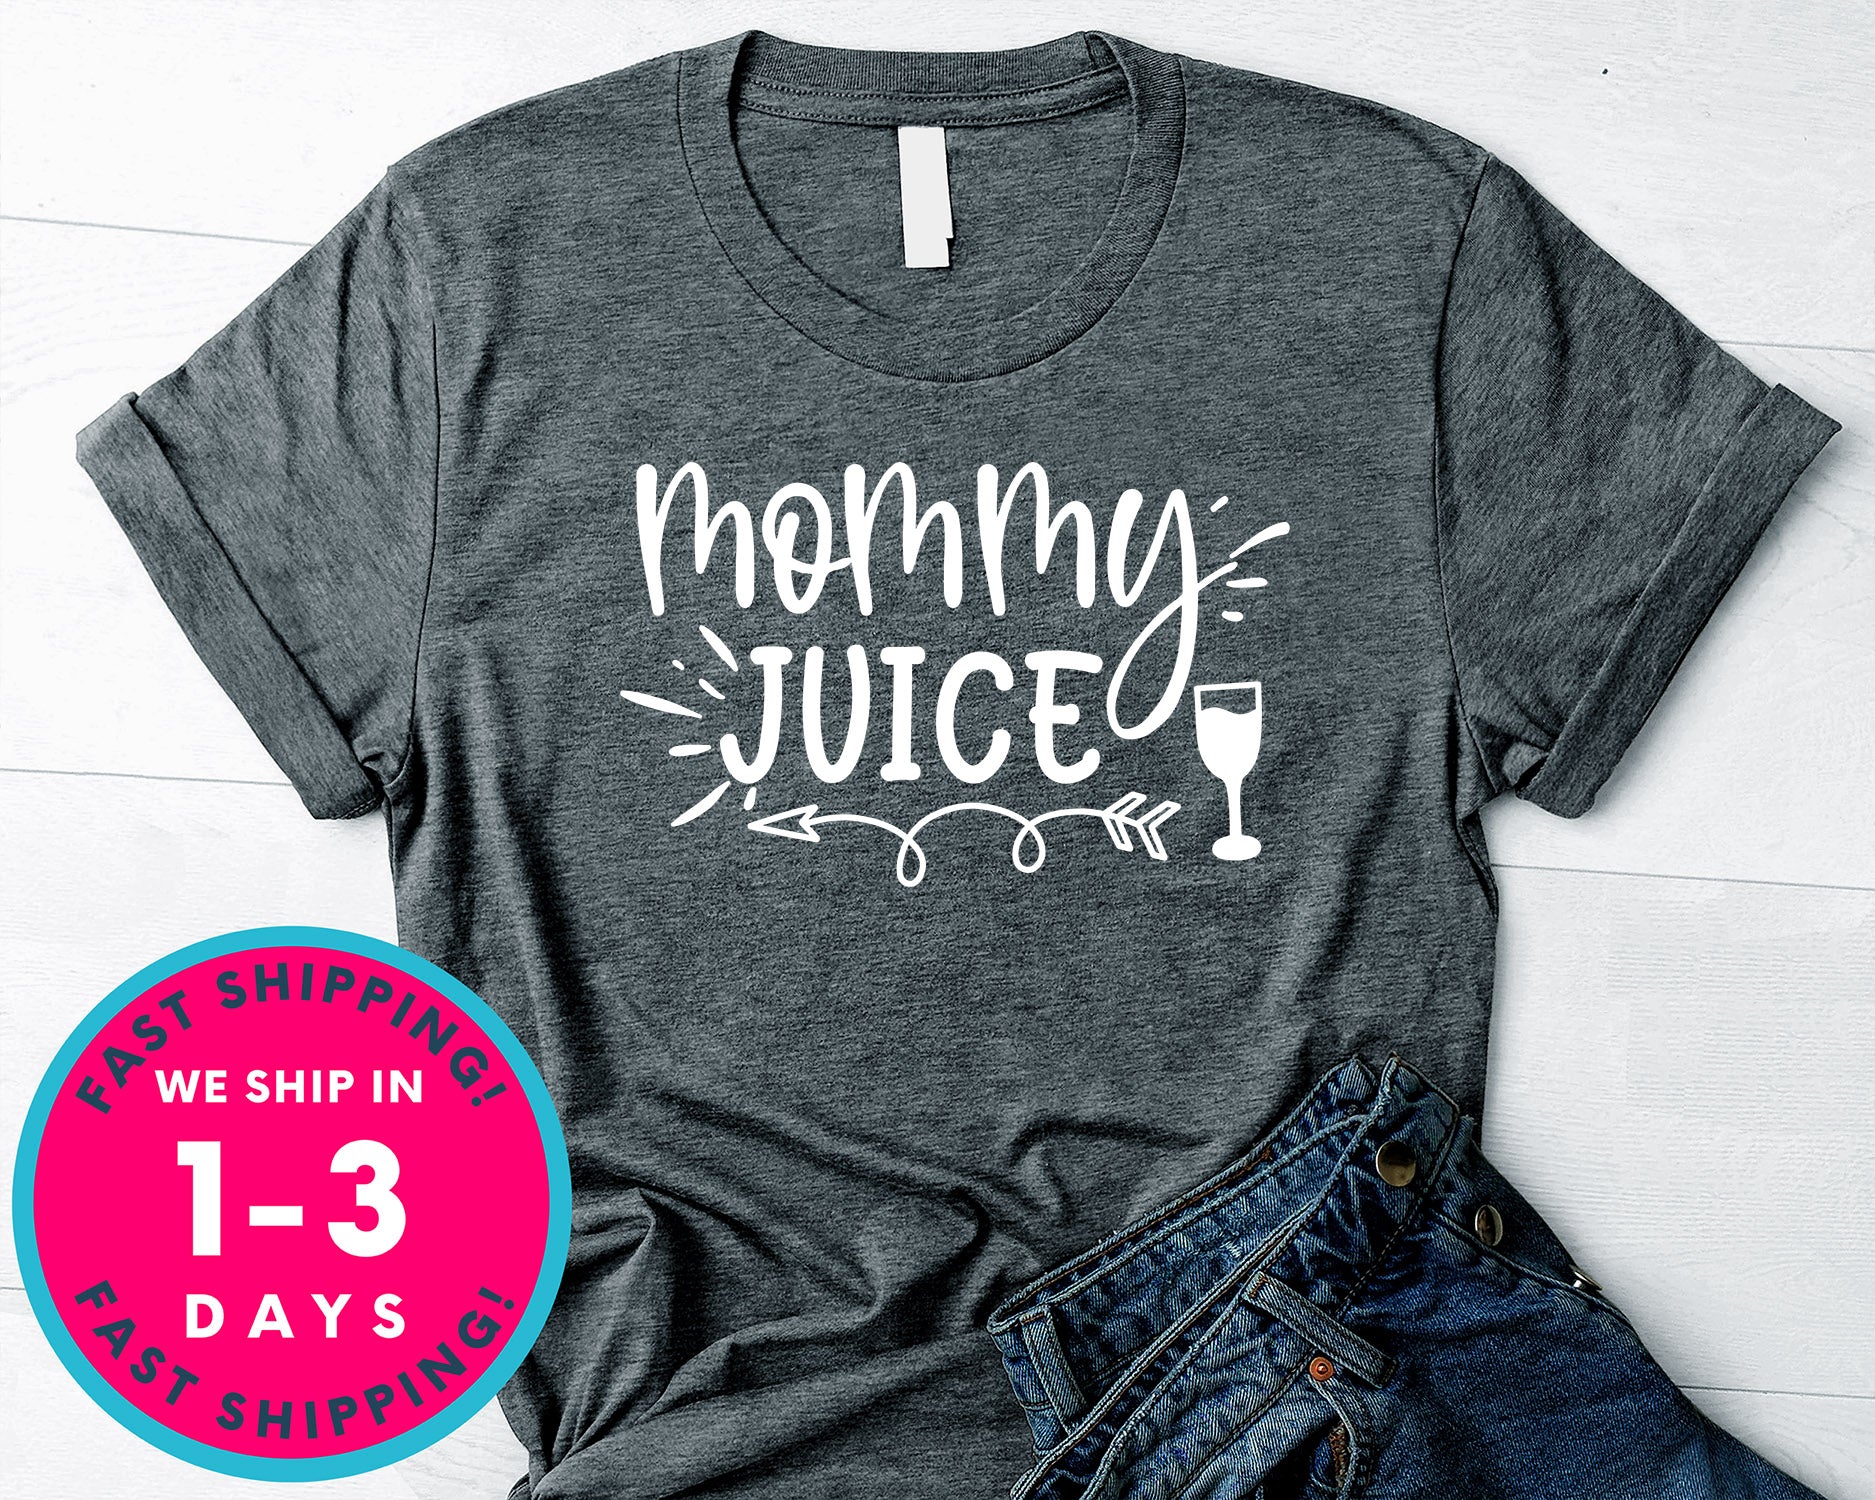 Mommy Juice